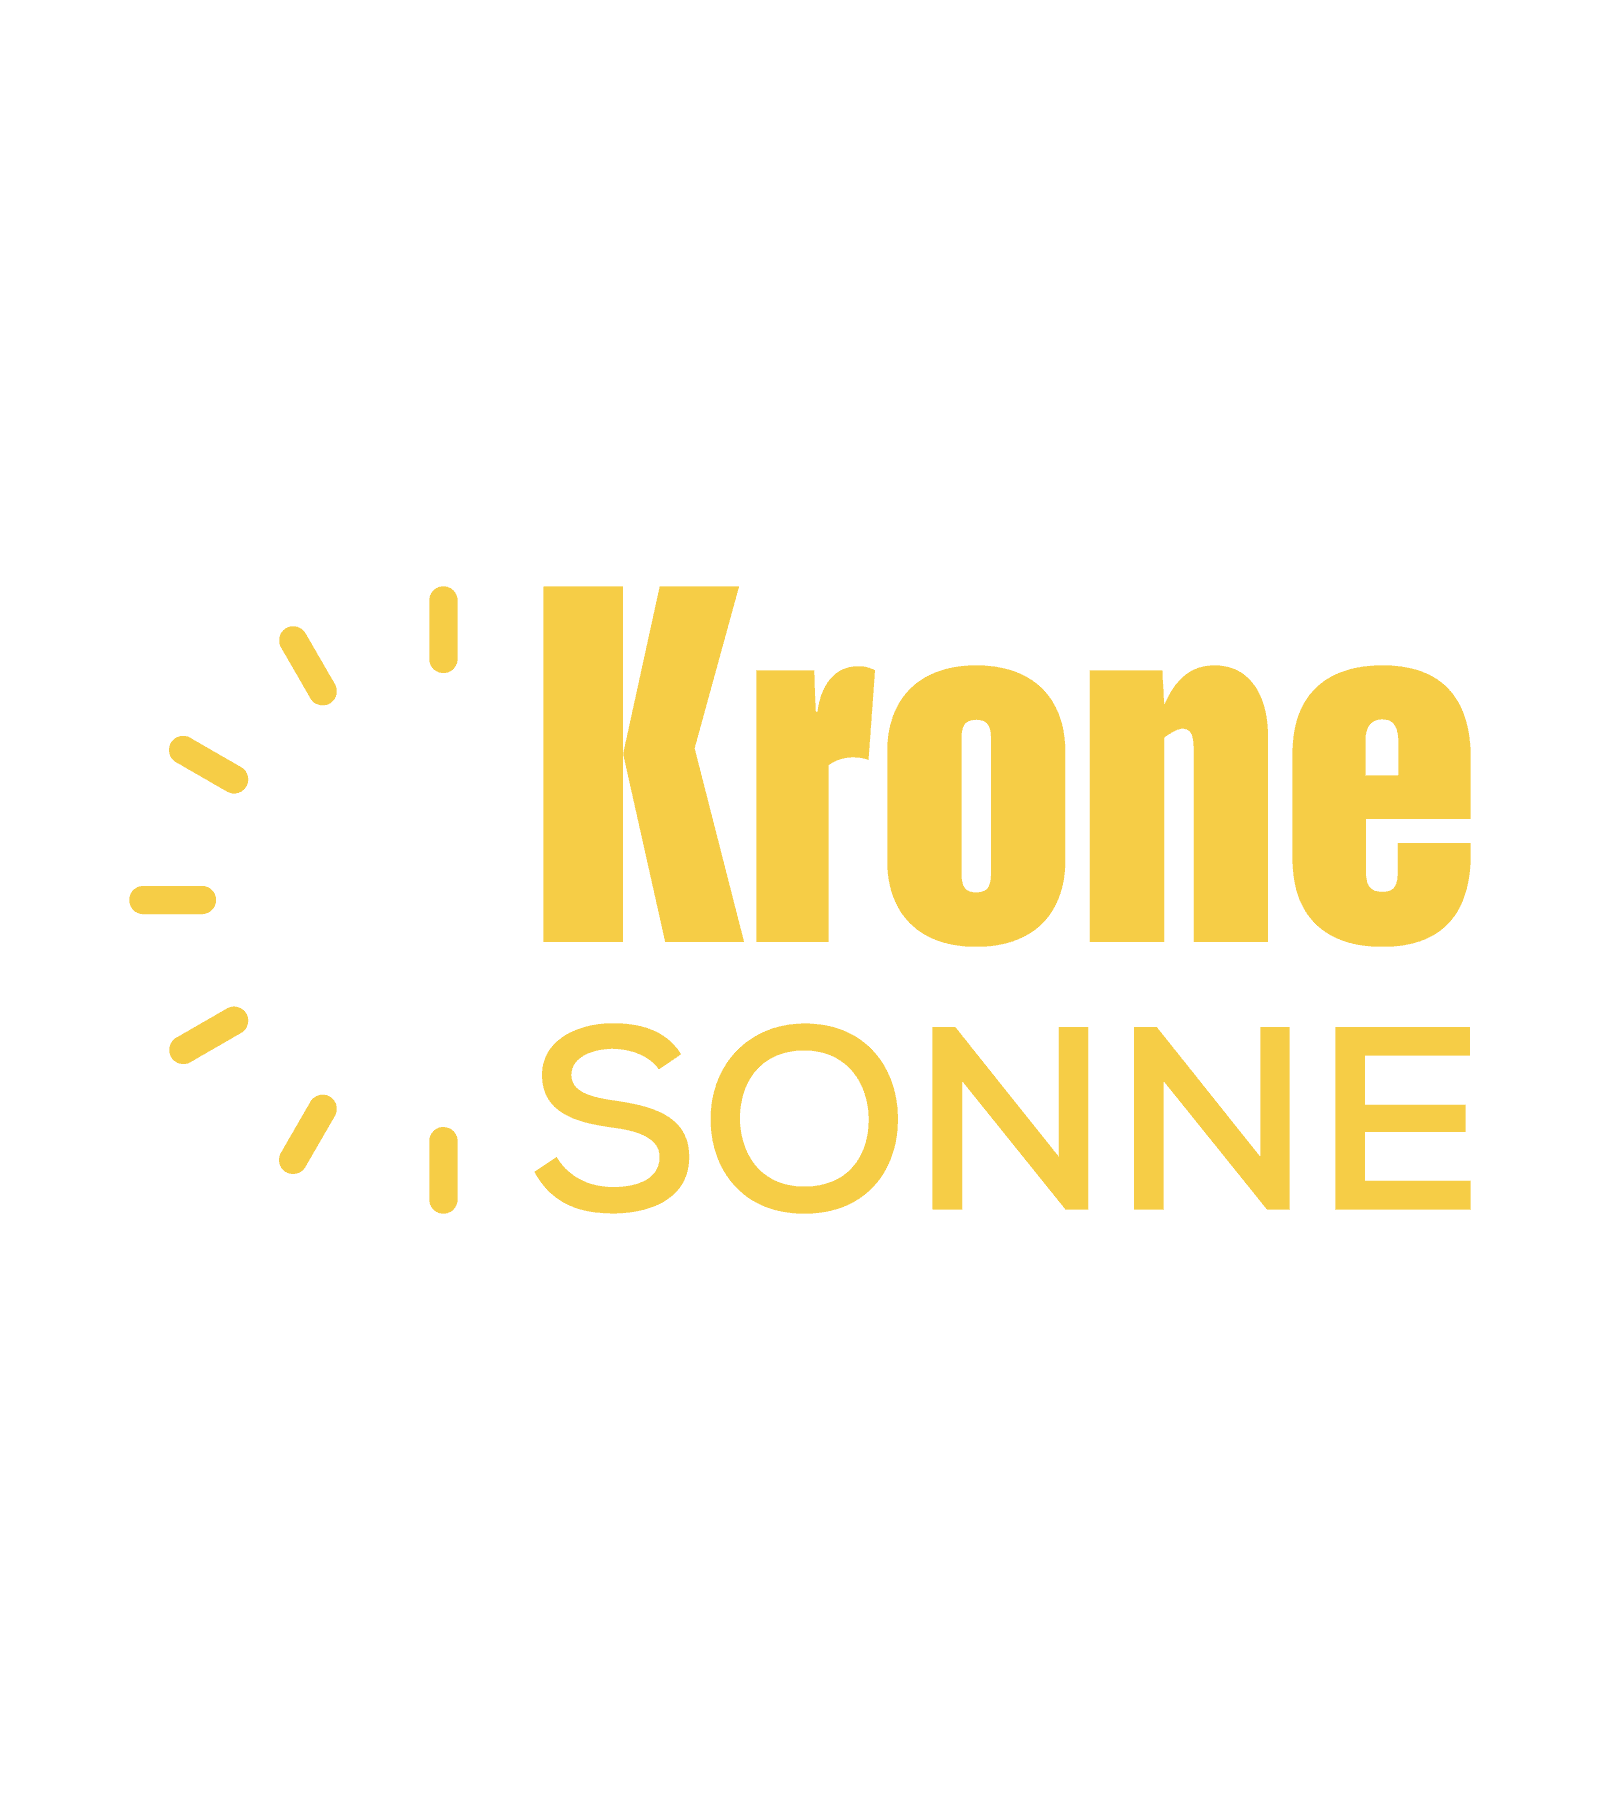 THE ORGINAL-kronesonne-logo.png